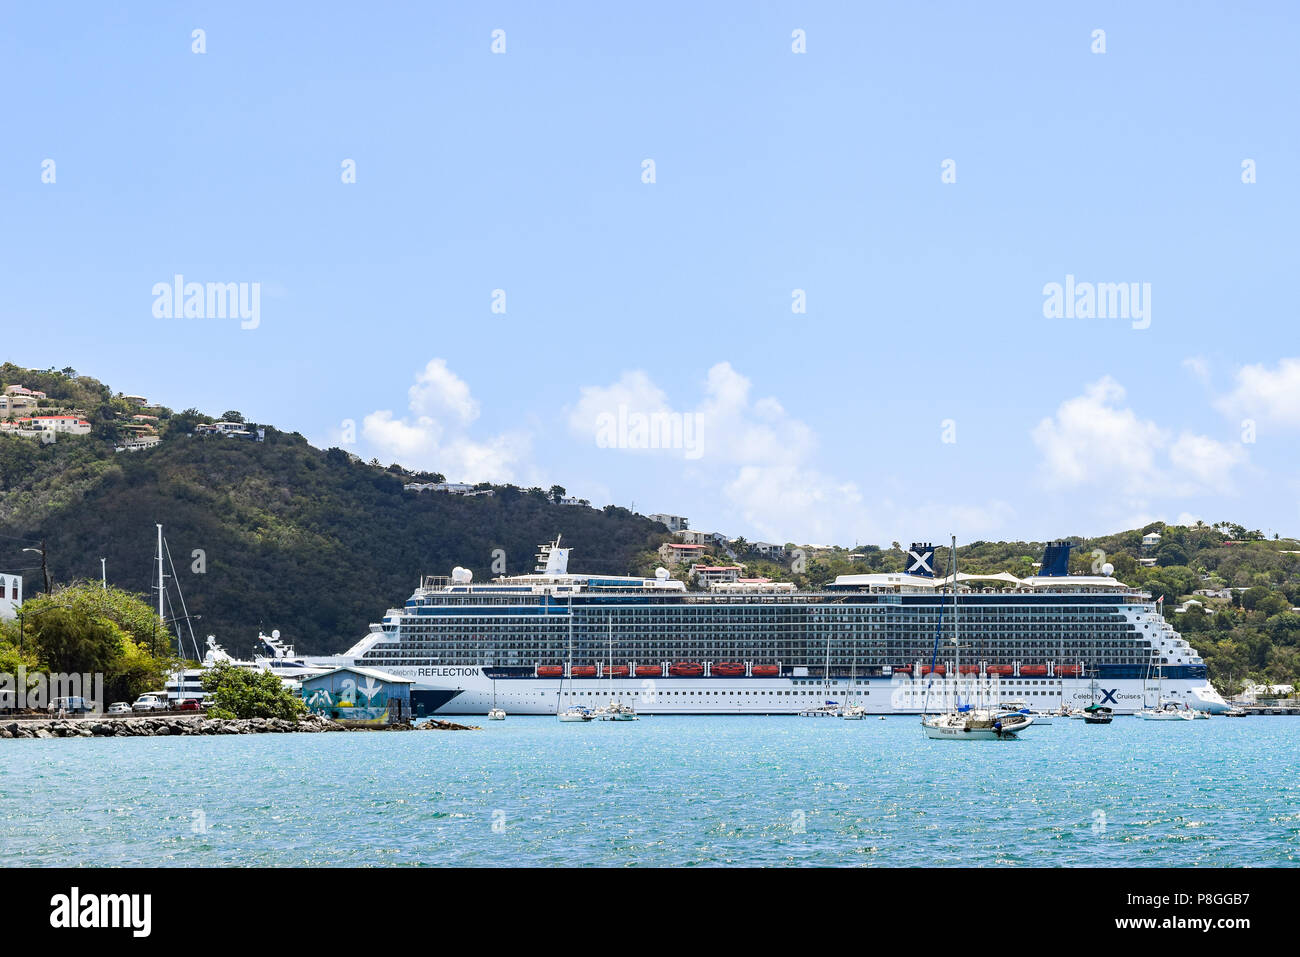 Saint Thomas, US Virgin Islands - April 01 2014: Celebrity Reflection Cruise Ship docked in Saint Thomas in the US Virgin Islands. Stock Photo